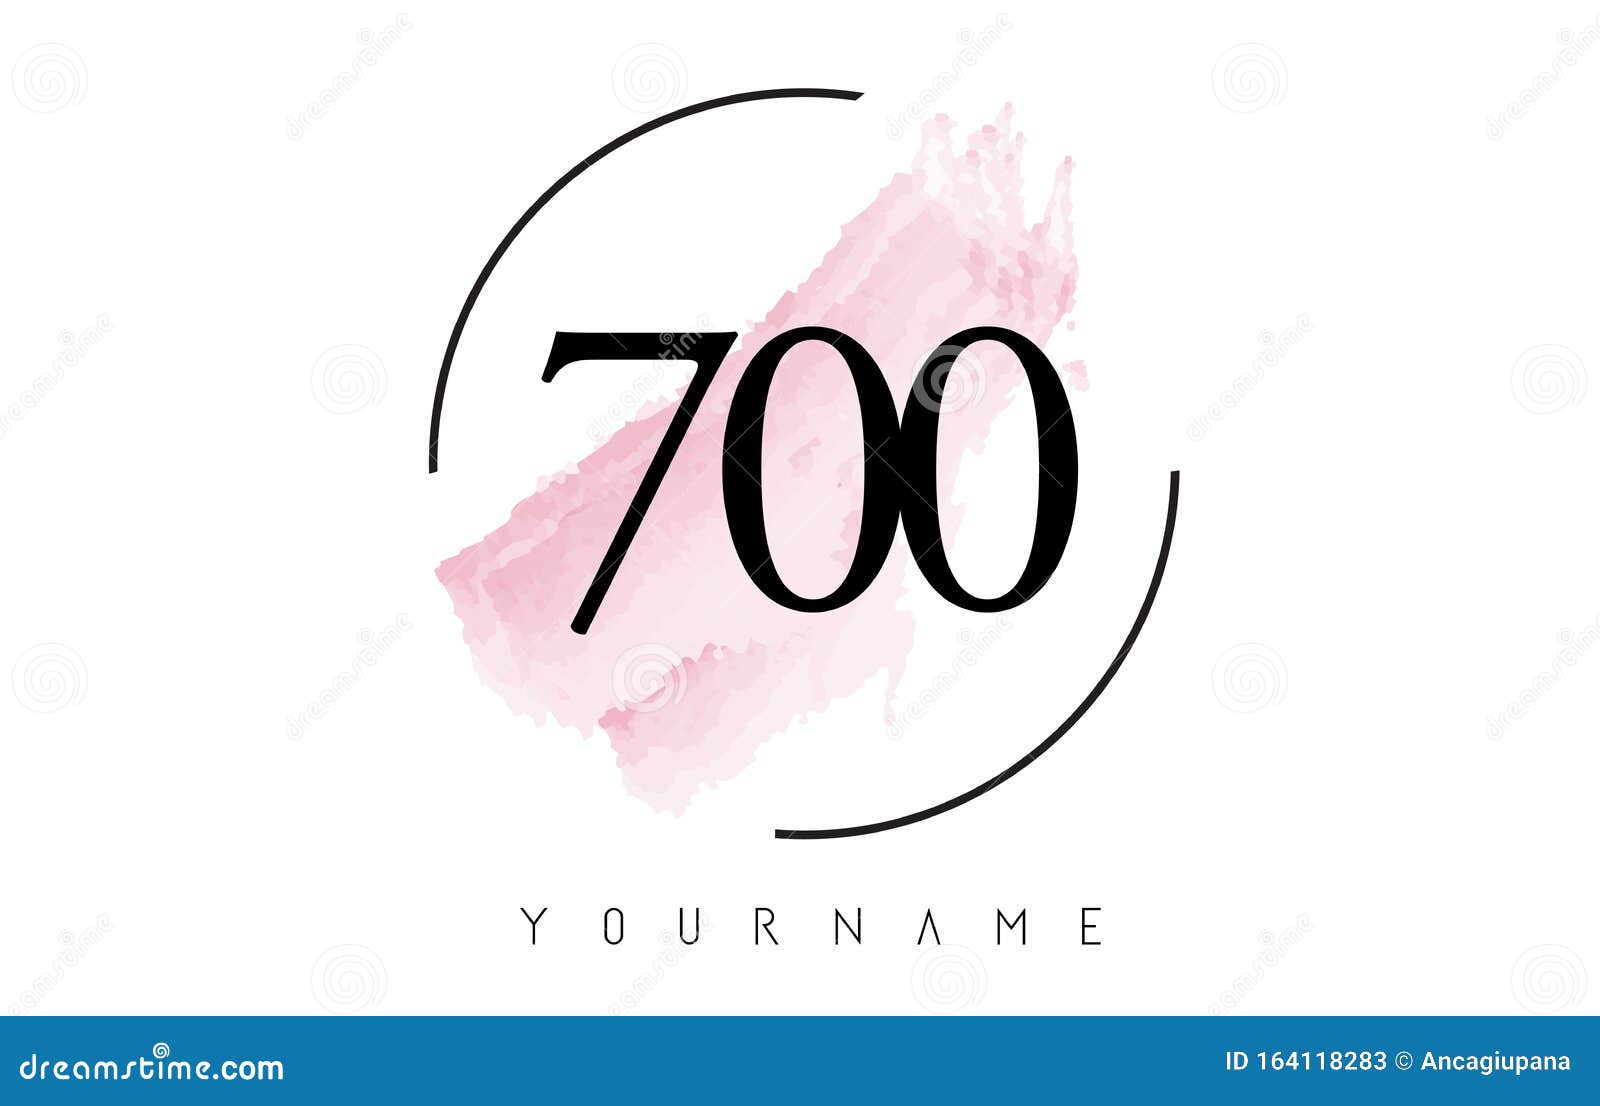 Number 700 Watercolor Stroke Logo Design With Circular Brush Pattern ...
